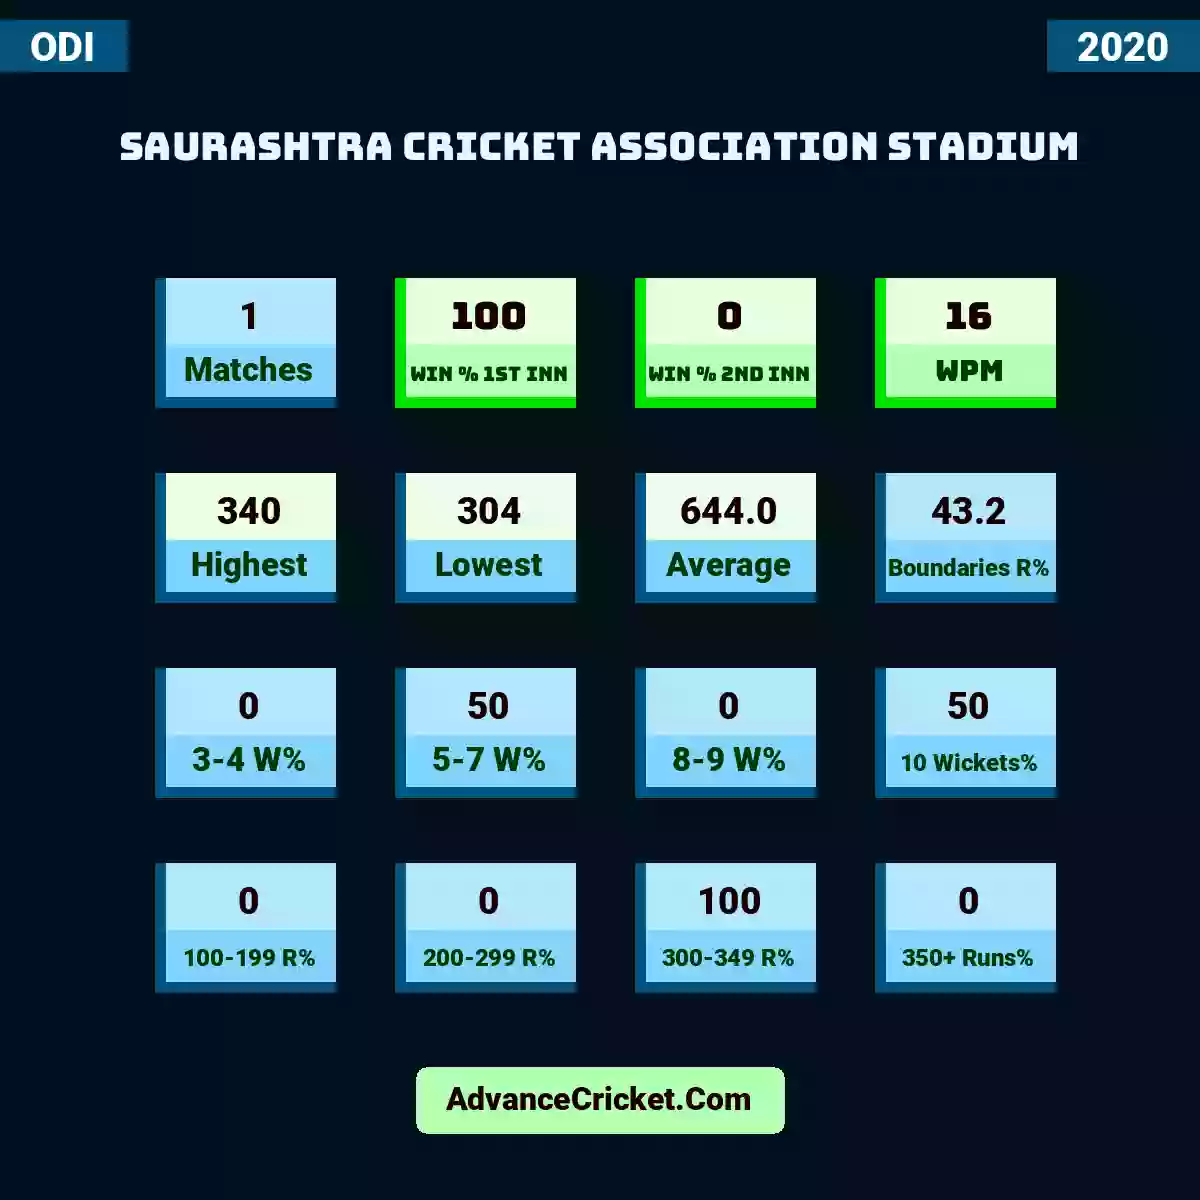 Image showing Saurashtra Cricket Association Stadium with Matches: 1, Win % 1st Inn: 100, Win % 2nd Inn: 0, WPM: 16, Highest: 340, Lowest: 304, Average: 644.0, Boundaries R%: 43.2, 3-4 W%: 0, 5-7 W%: 50, 8-9 W%: 0, 10 Wickets%: 50, 100-199 R%: 0, 200-299 R%: 0, 300-349 R%: 100, 350+ Runs%: 0.